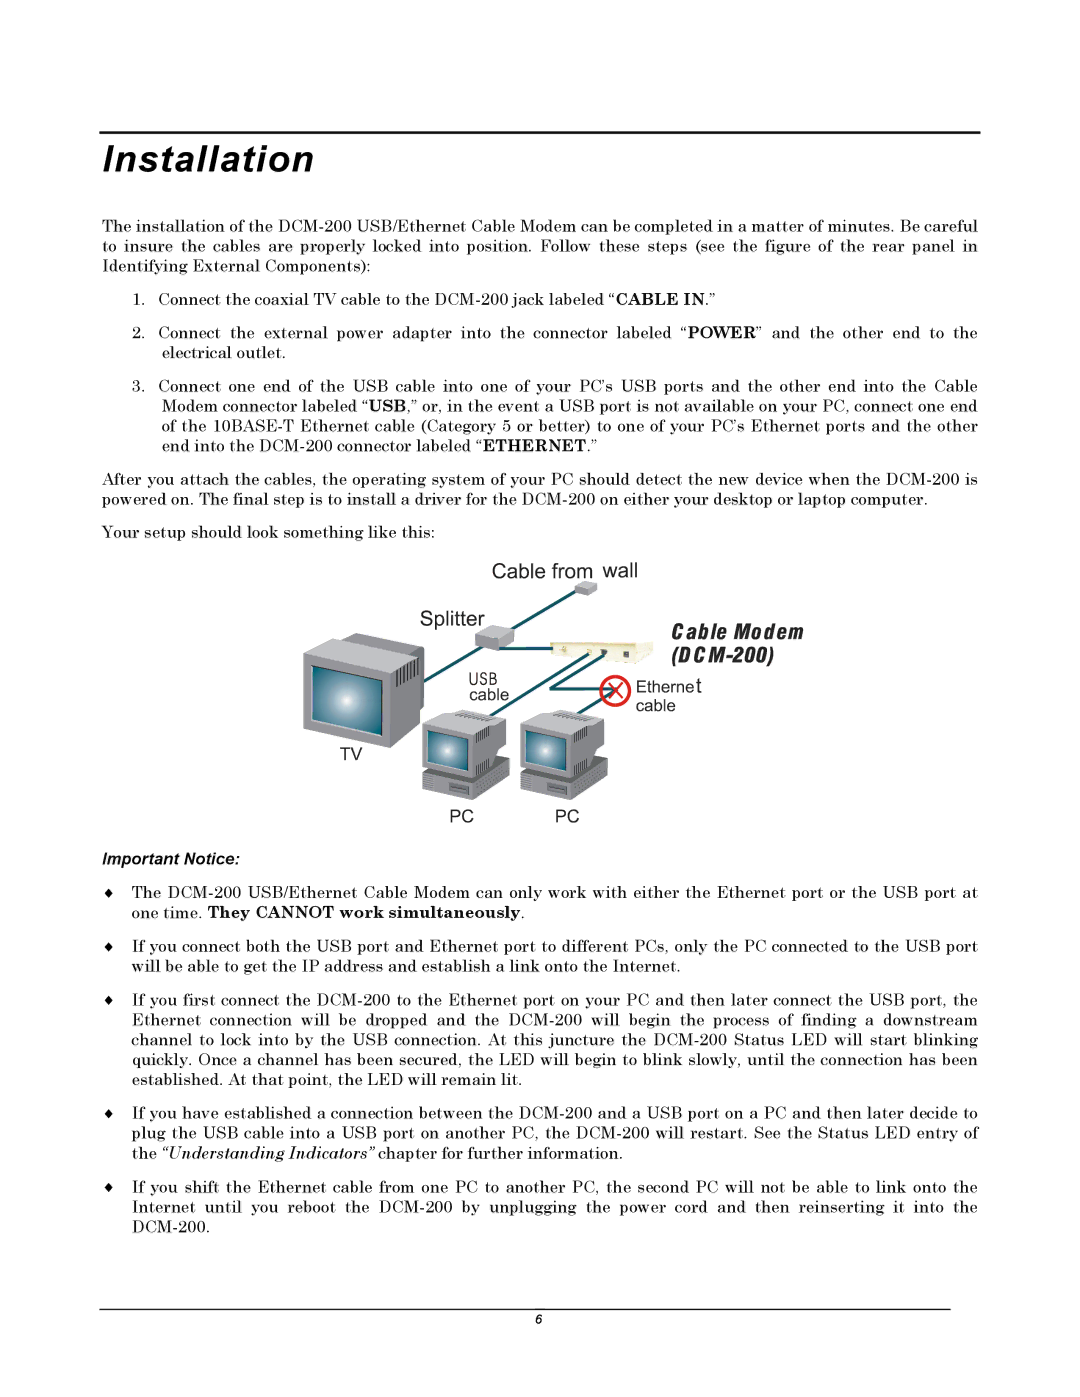 D-Link DCM-200 manual Installation, Important Notice 